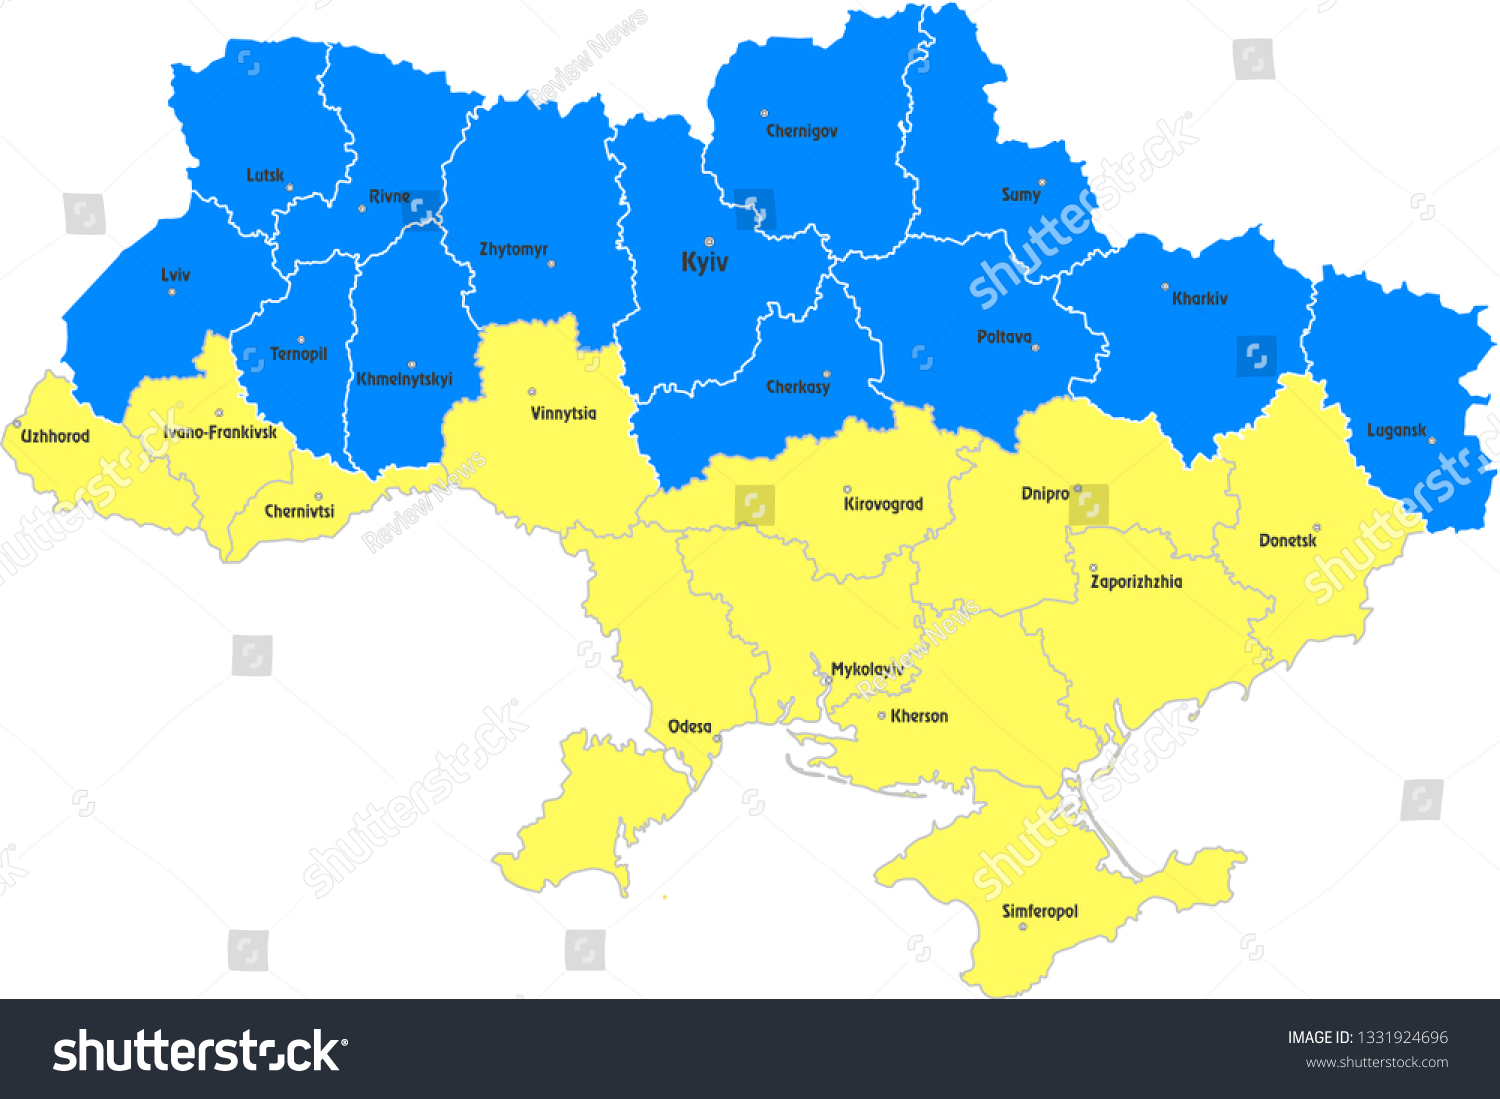 Ukraine regions. Ар регион Украины. ВМ регион Украины. Украинский регион св. Регионы Украины по номерам.